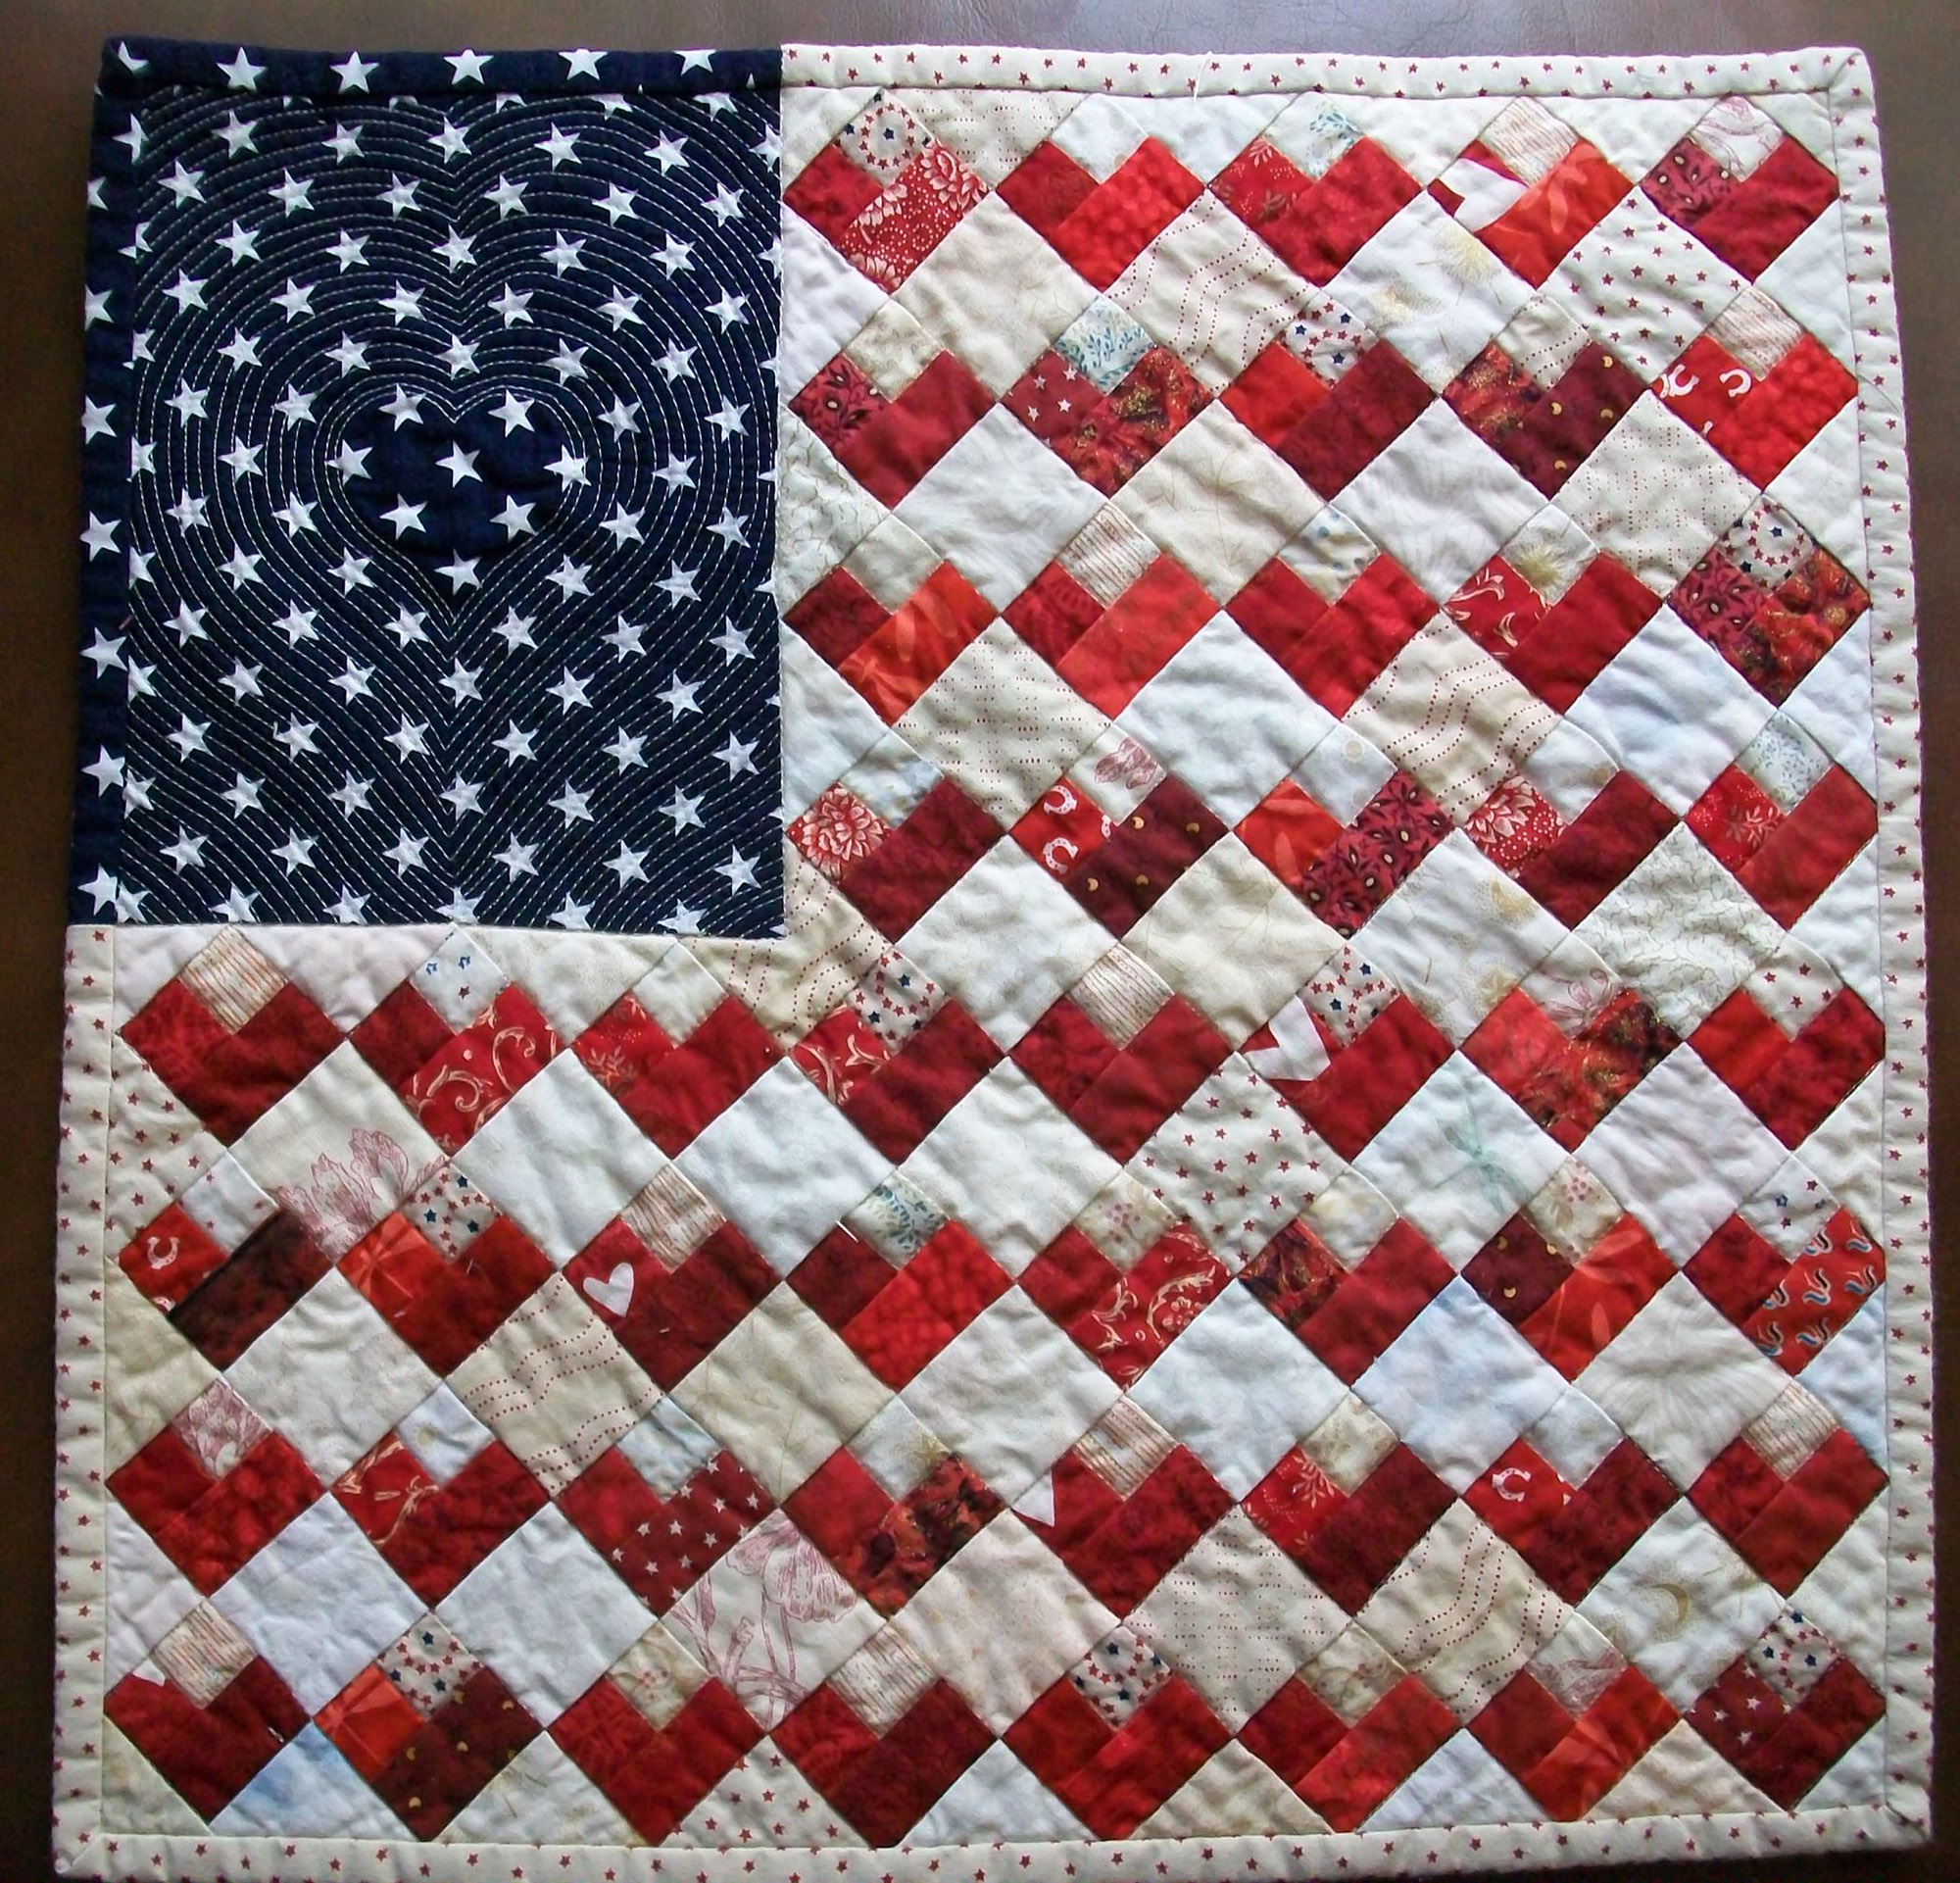 <em>Flag Quilt with Hearts</em>, Ramona Bates, Little Rock, AR